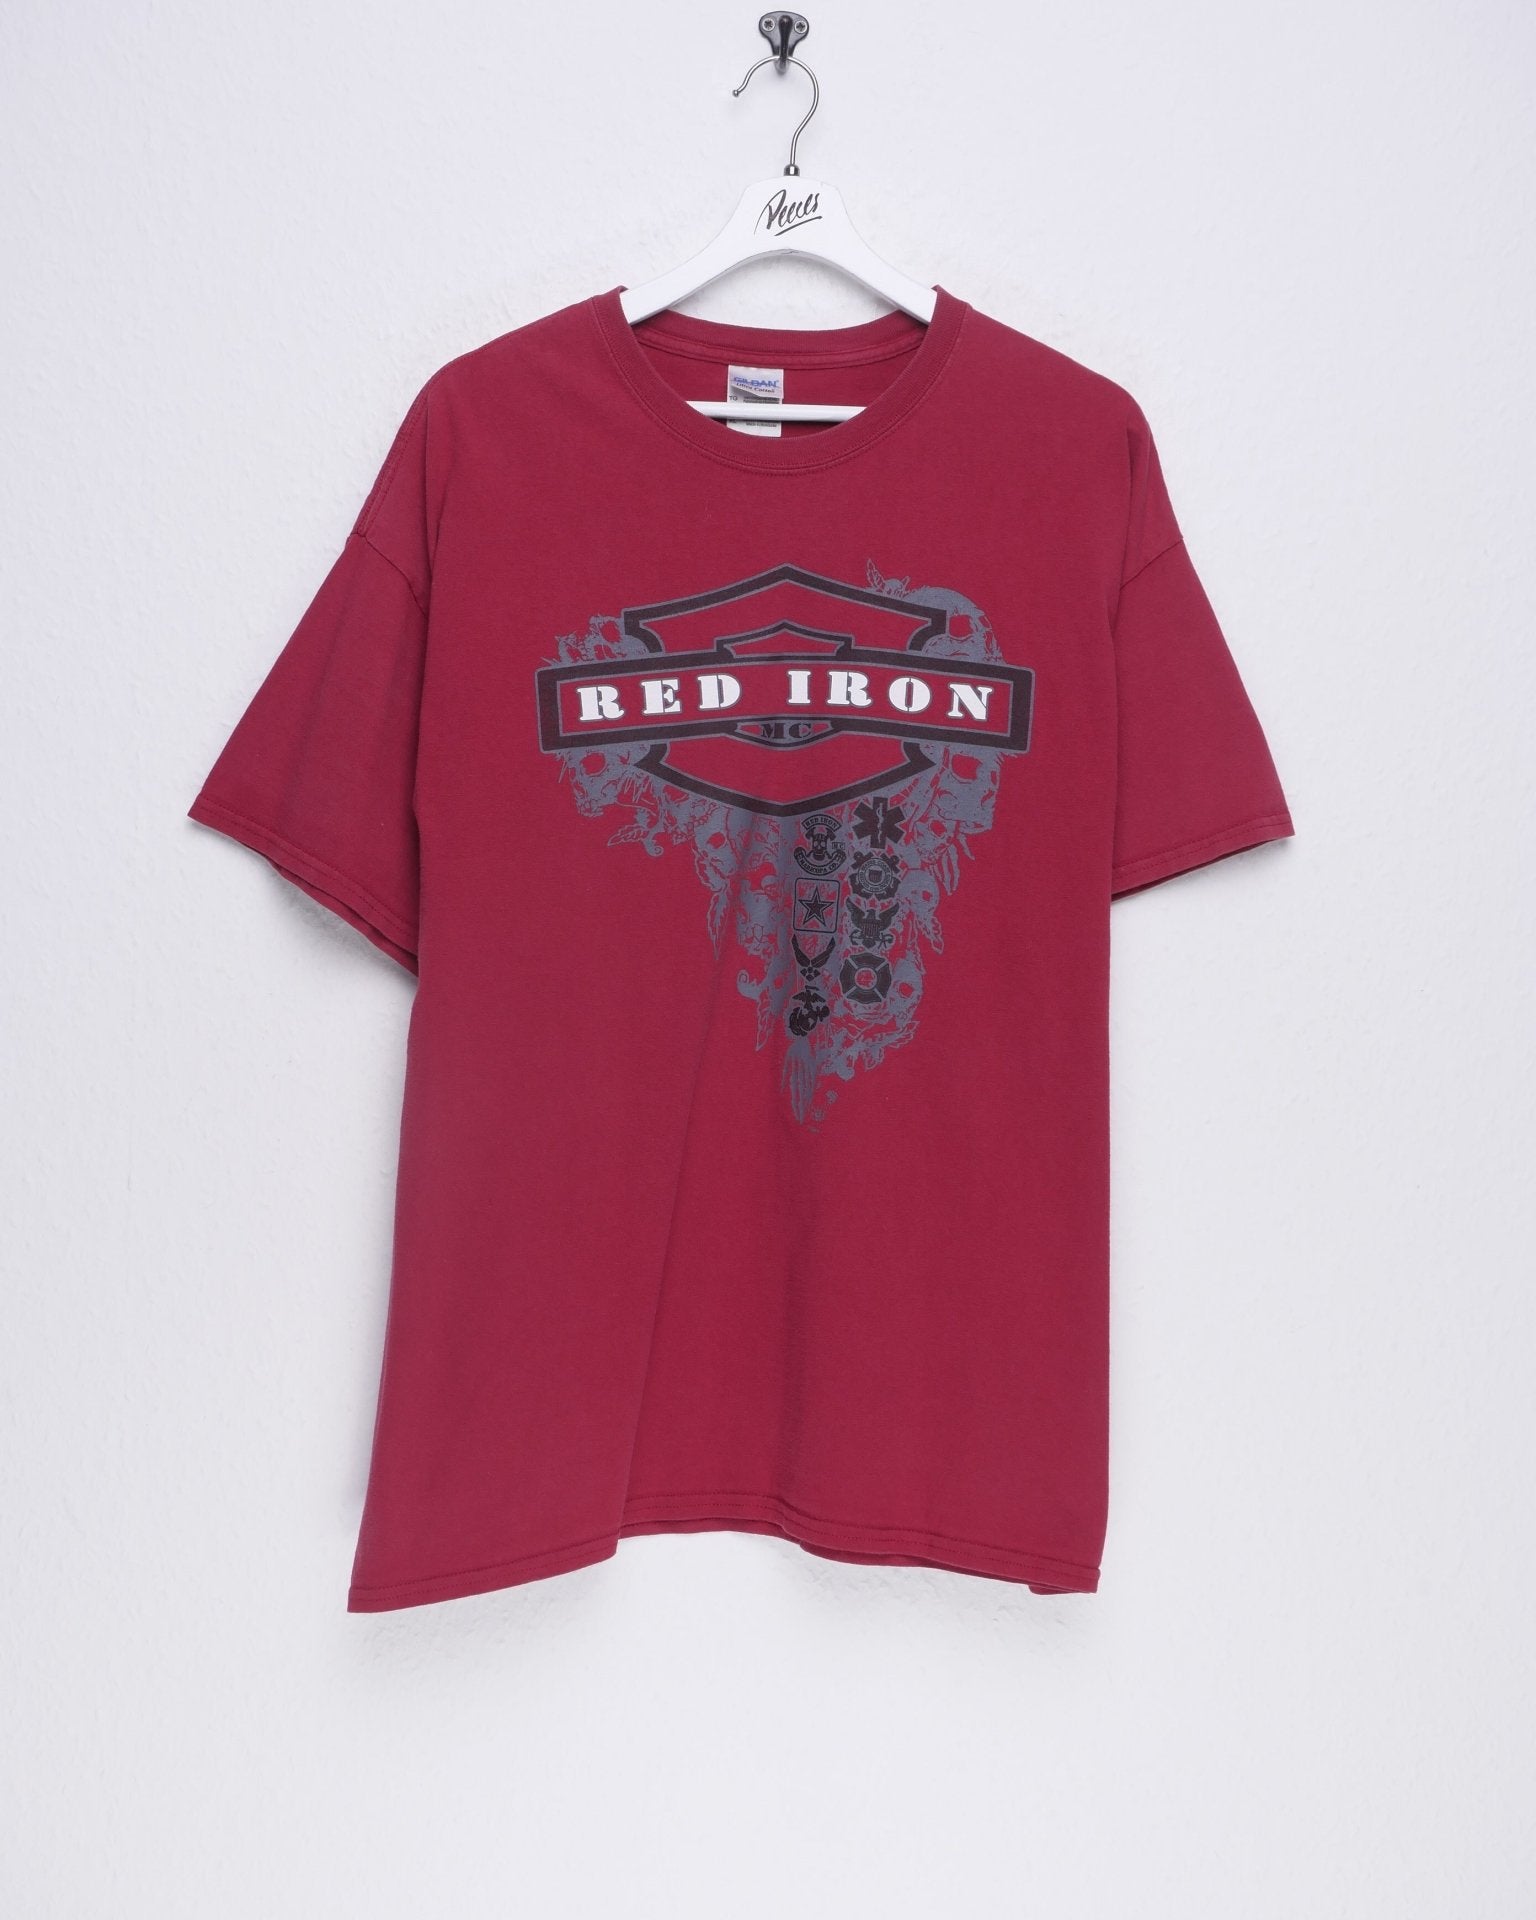 Red Iron printed Logo Shirt - Peeces